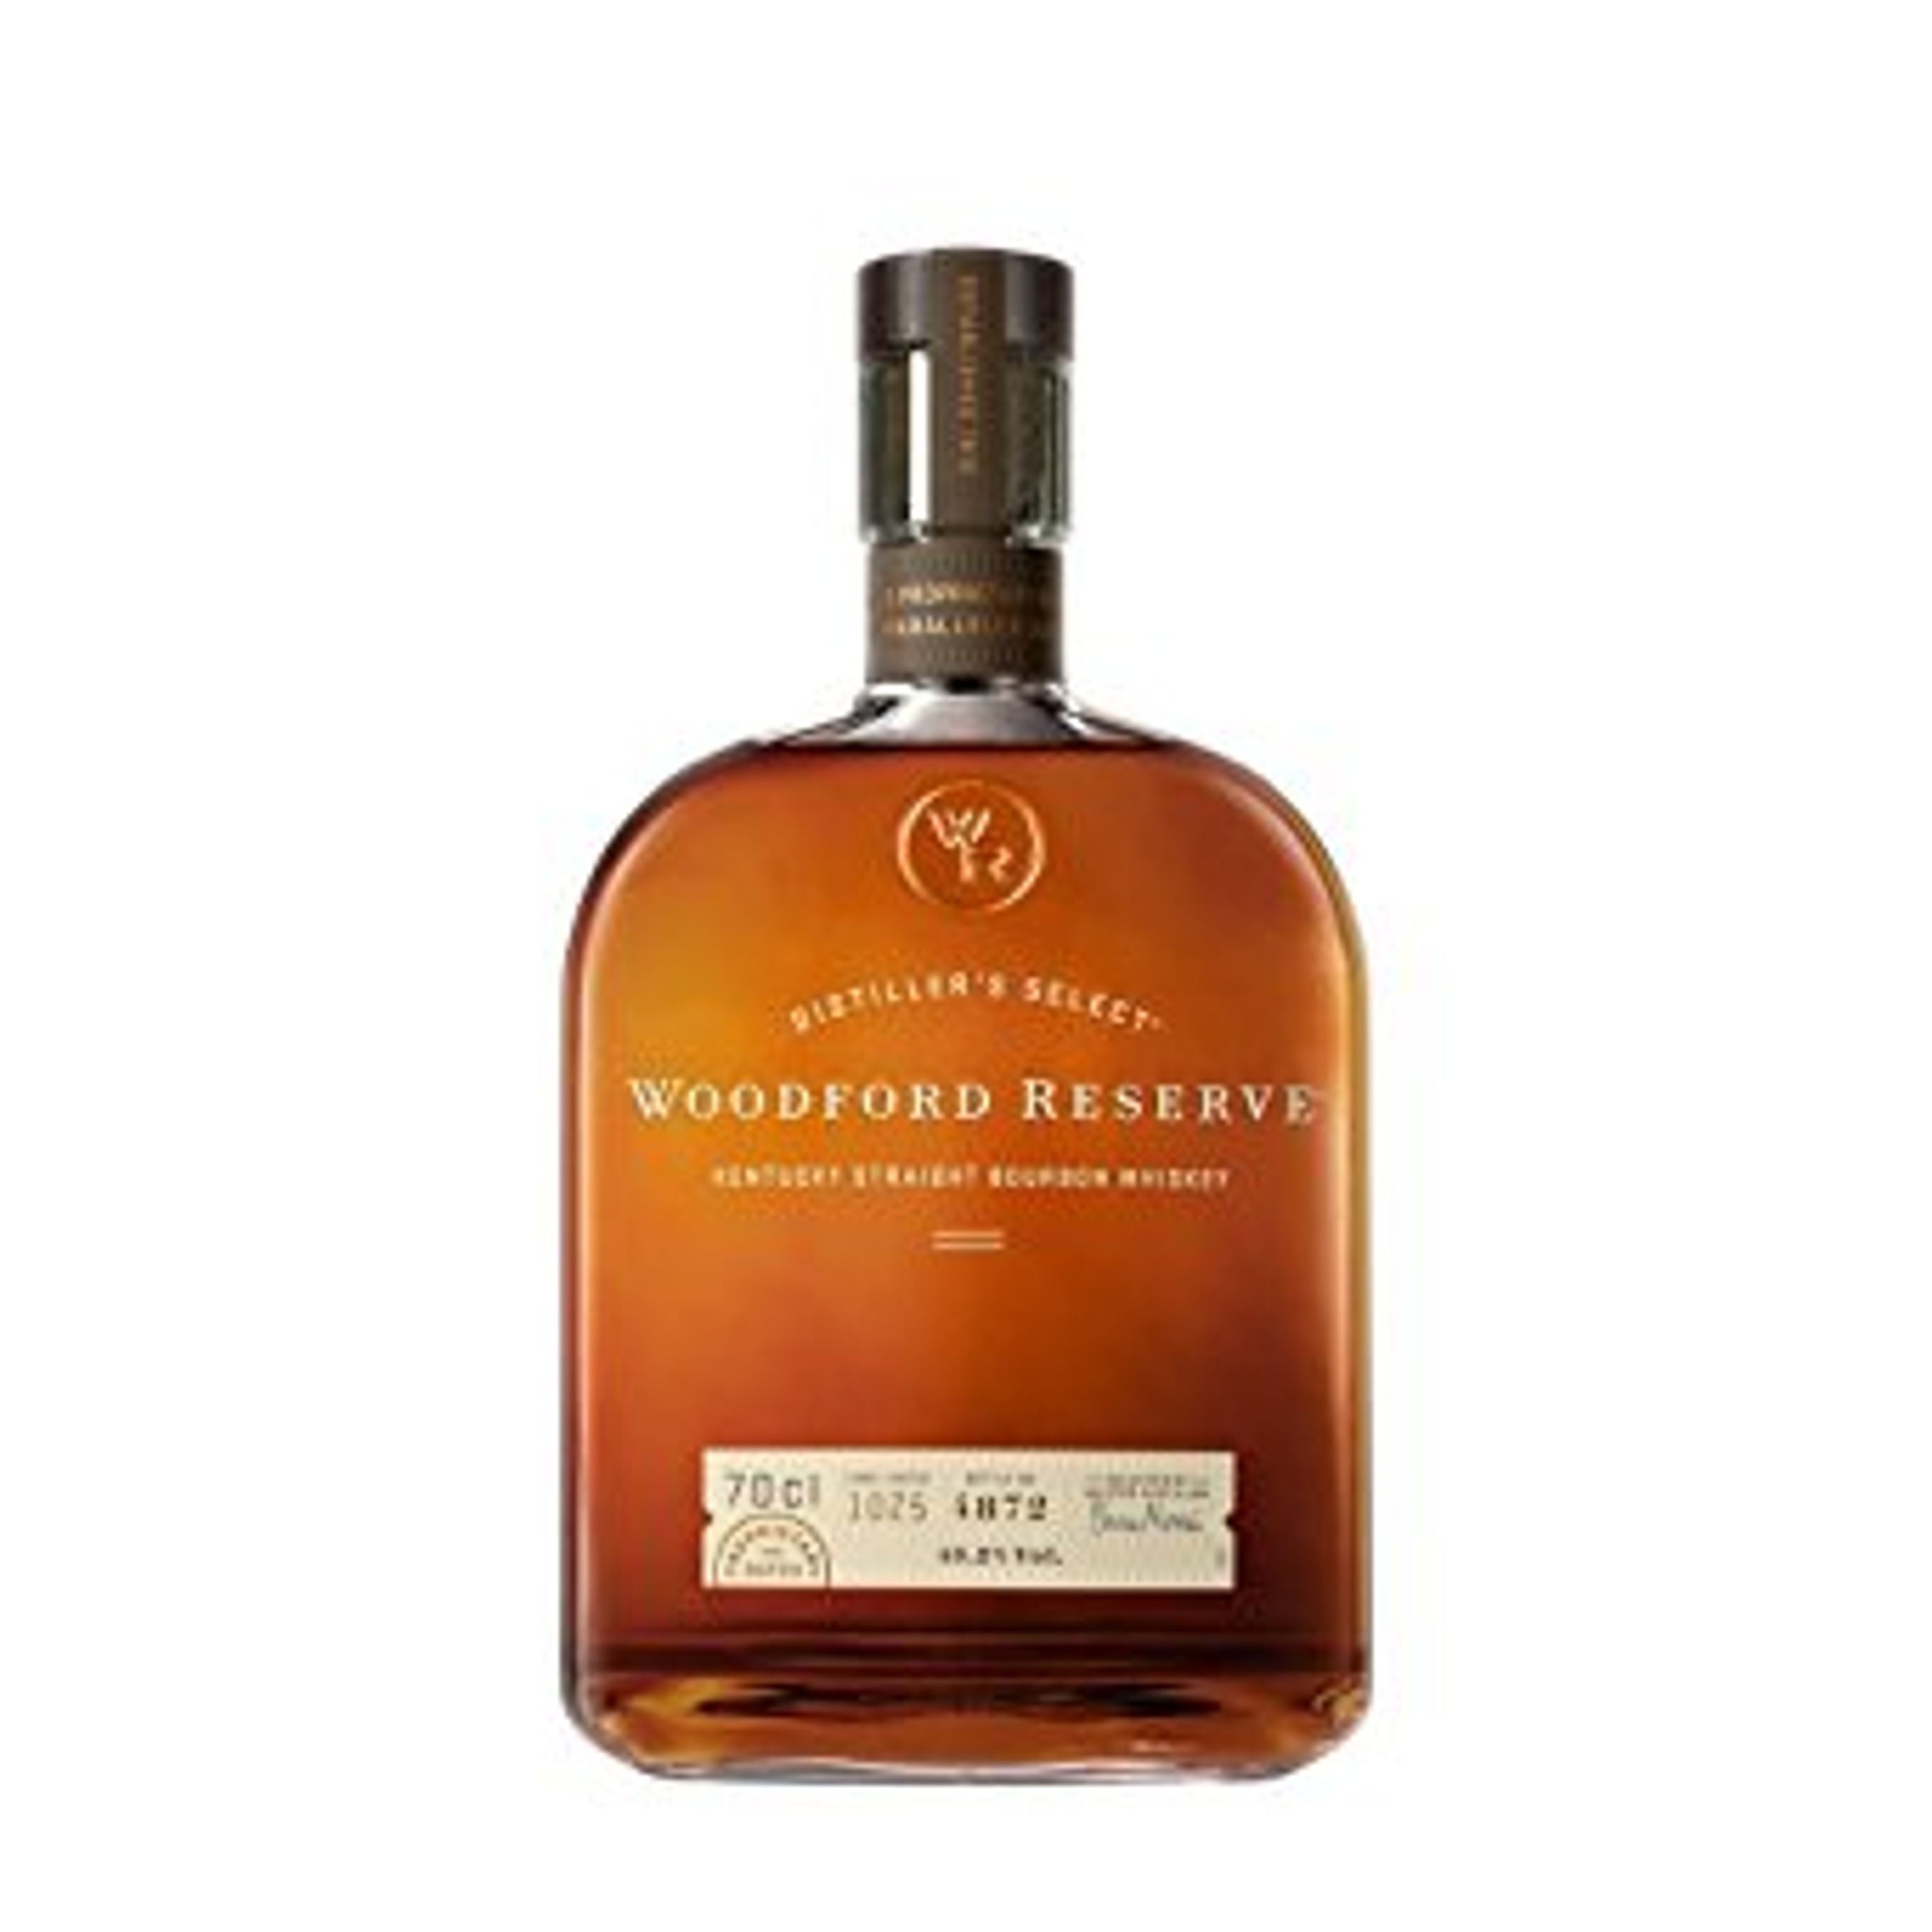 Woodford Reserve Kentucky Straight Bourbon Whiskey 0.7l, alc. 43.2% vol.